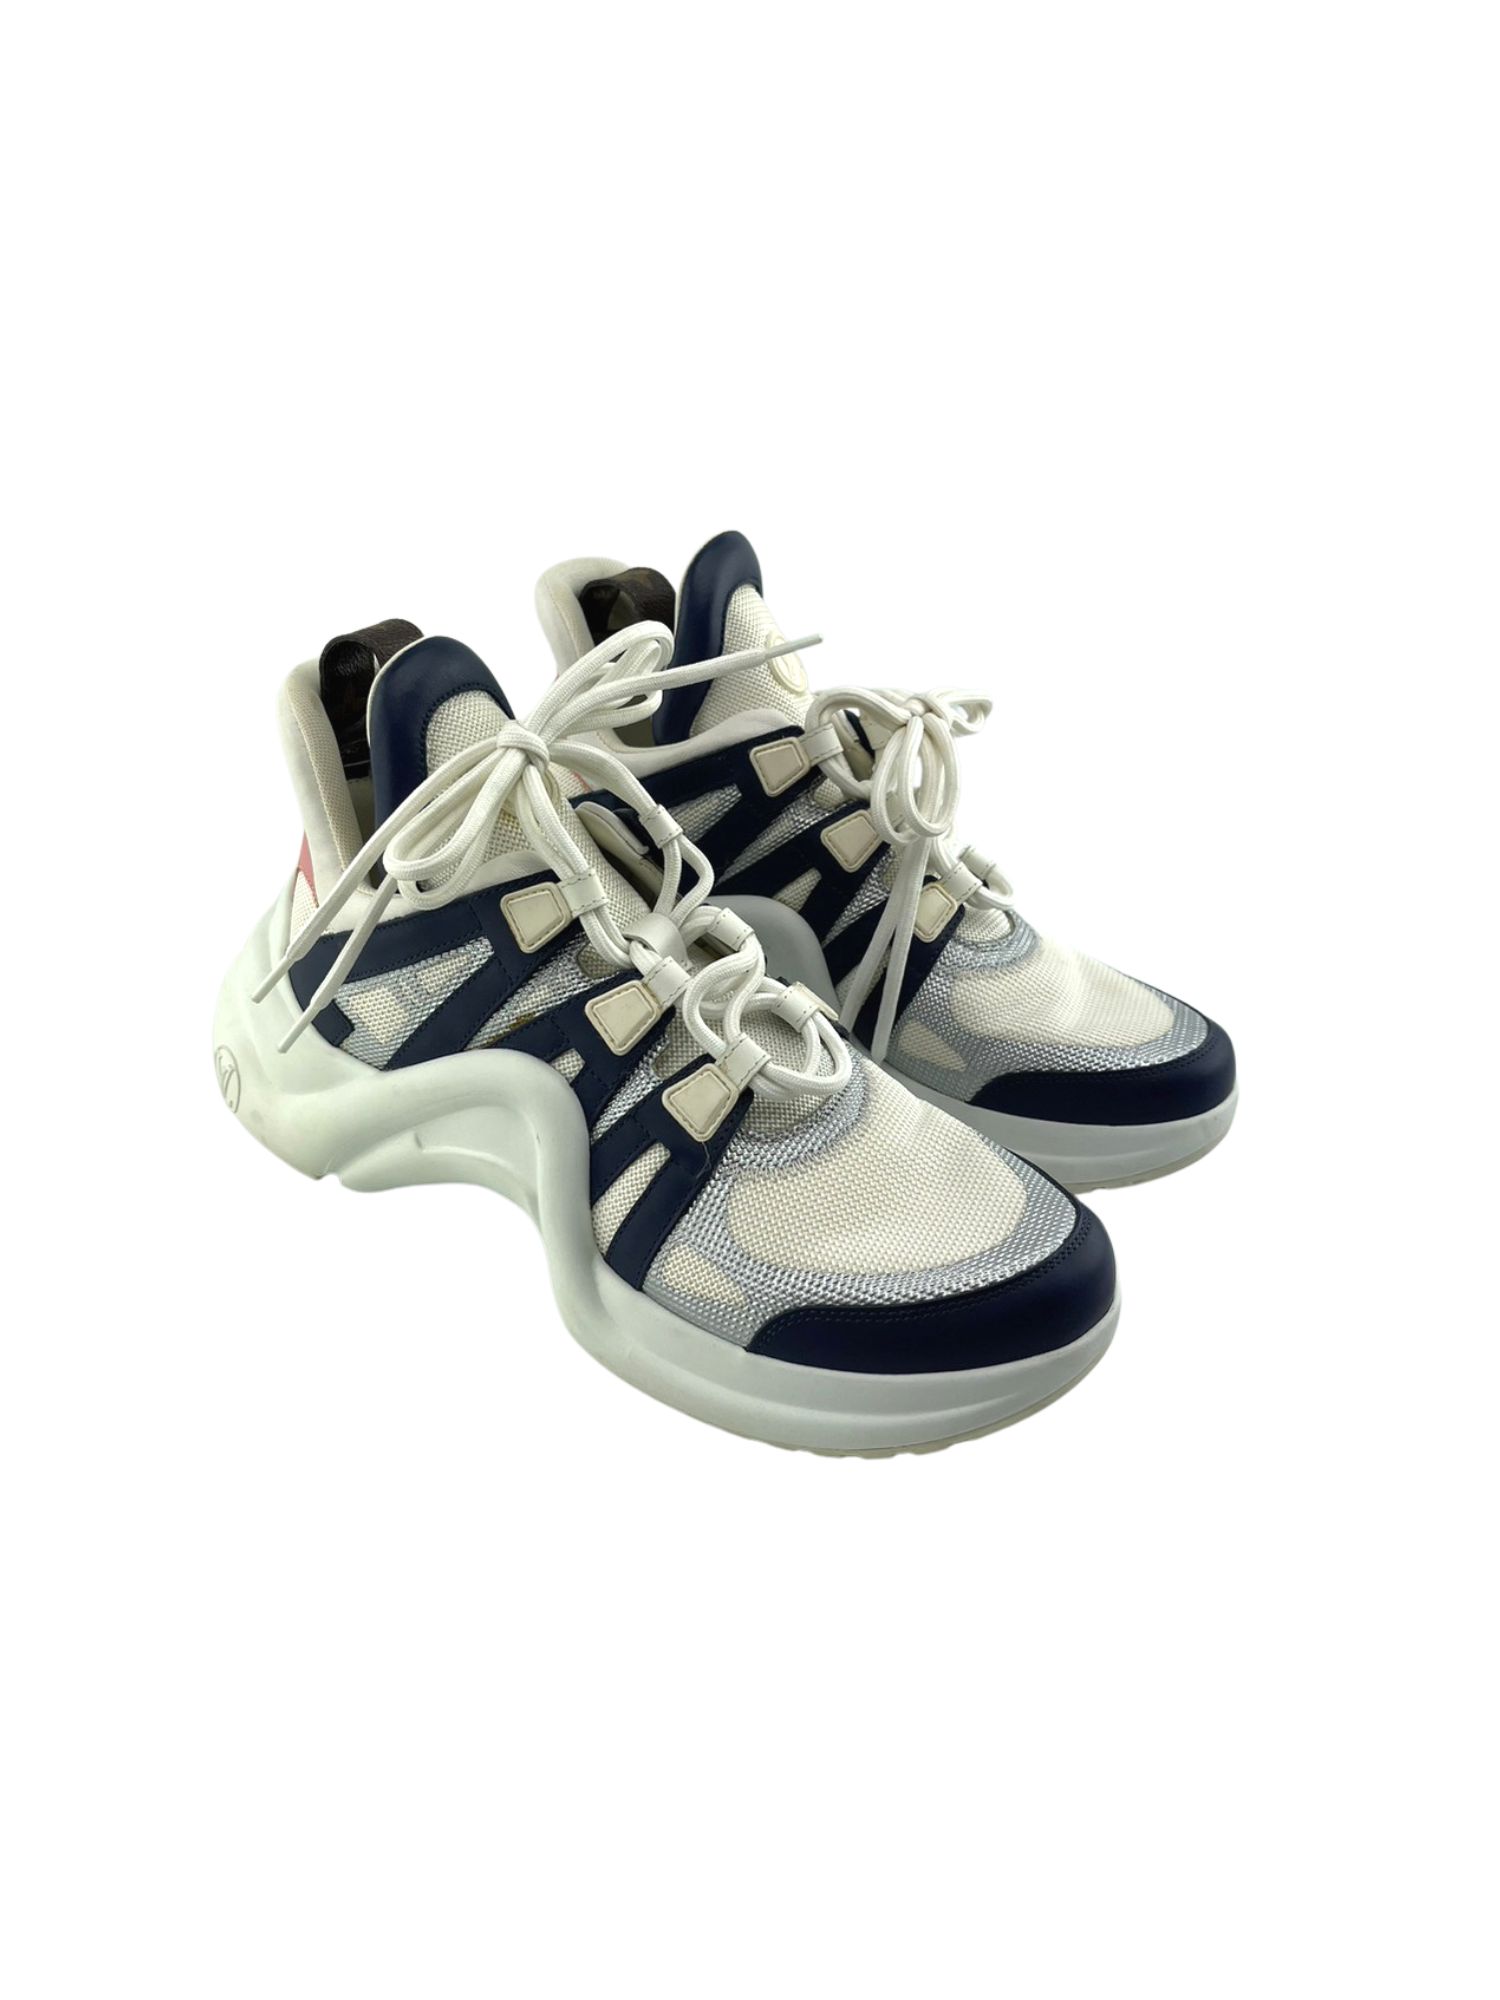 Louis Vuitton LV Archlight Sneaker, White, 41